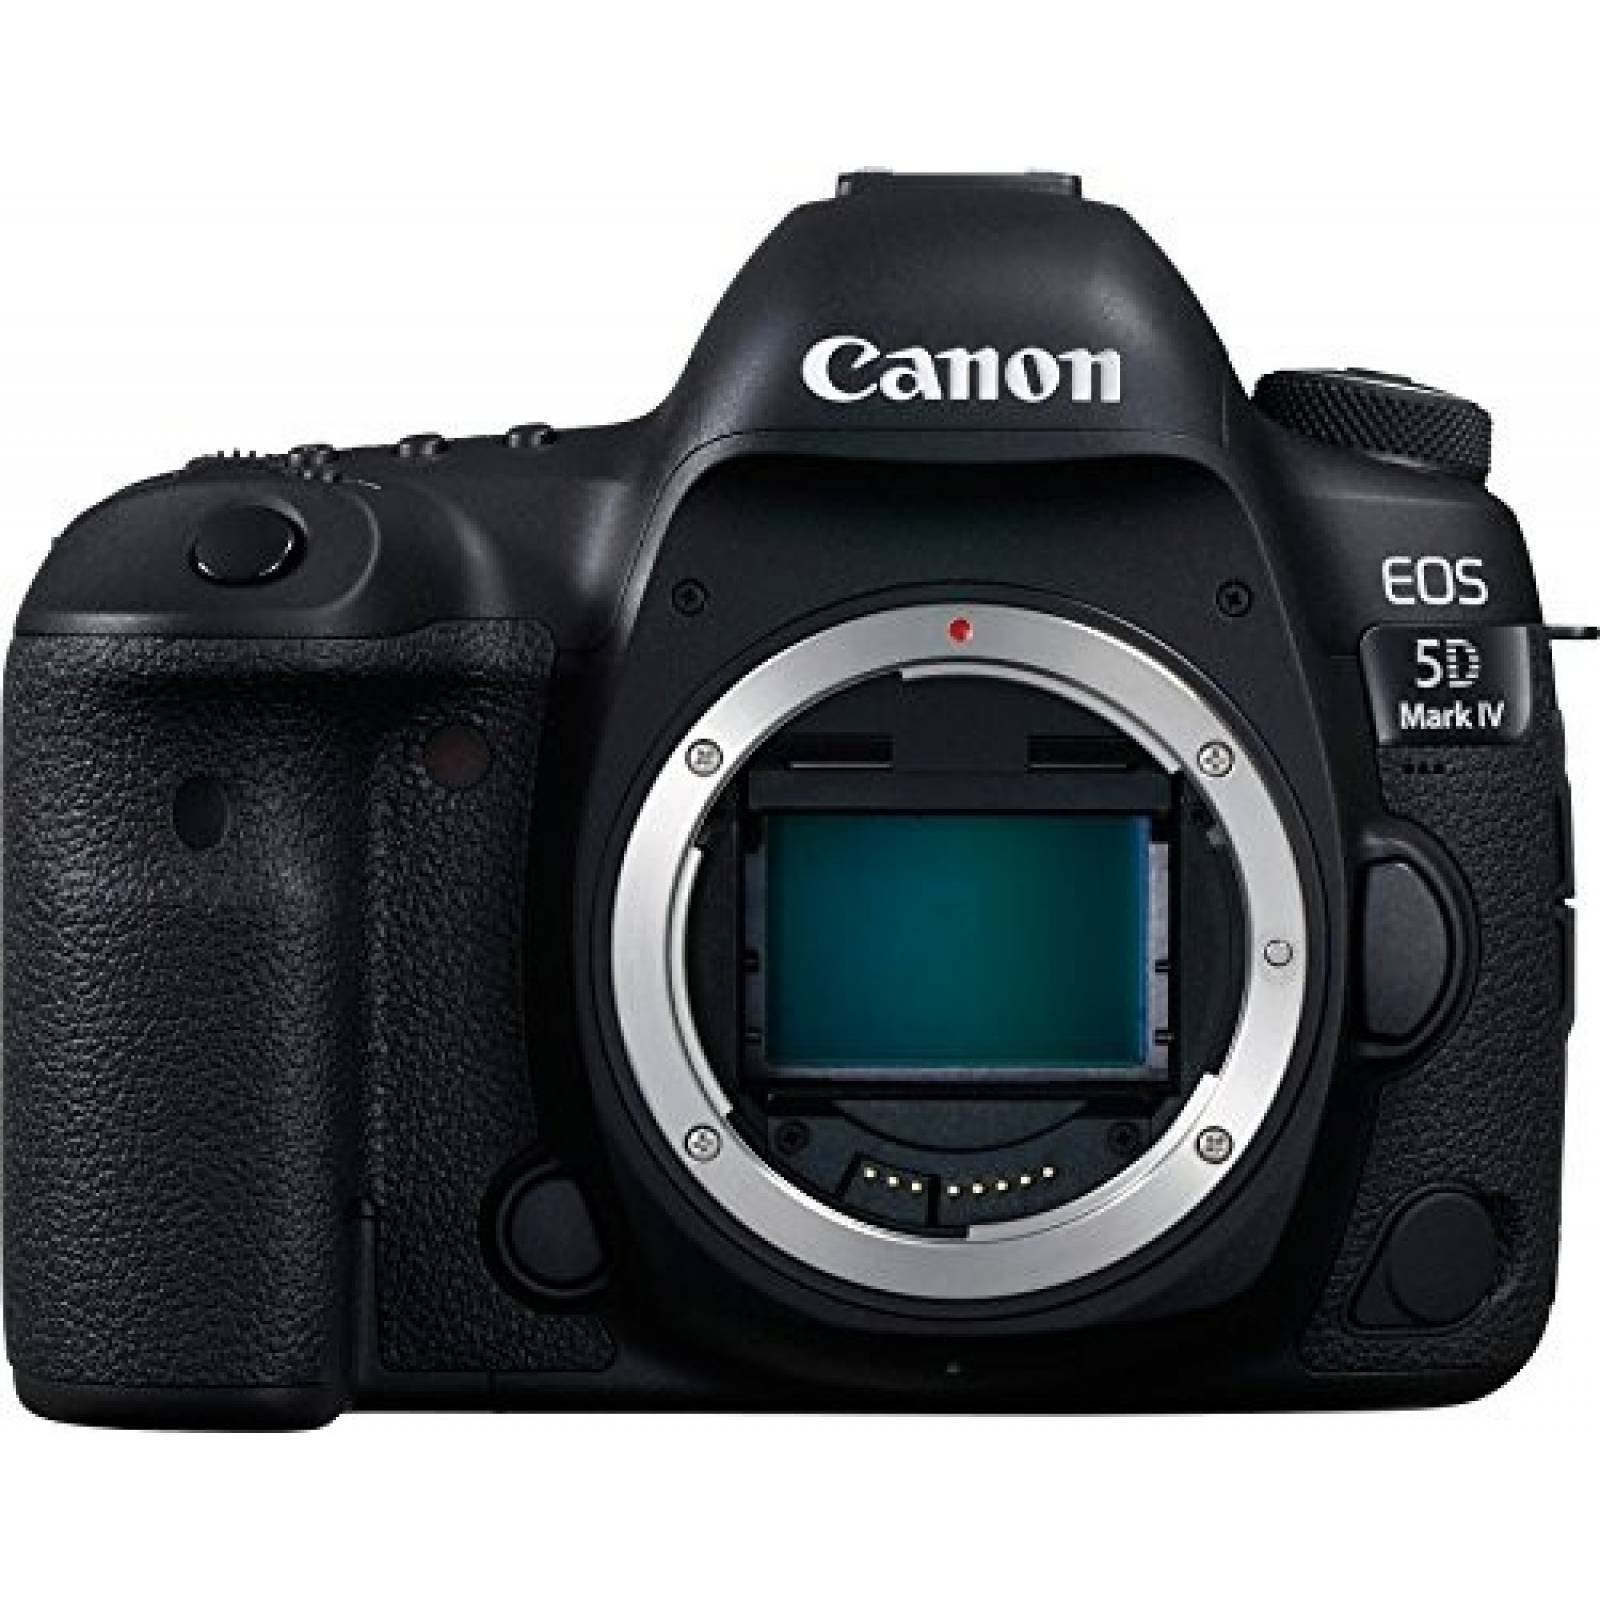 Cuerpo Cámara Canon EOS 5D Mark IV Digital SLR -Negro